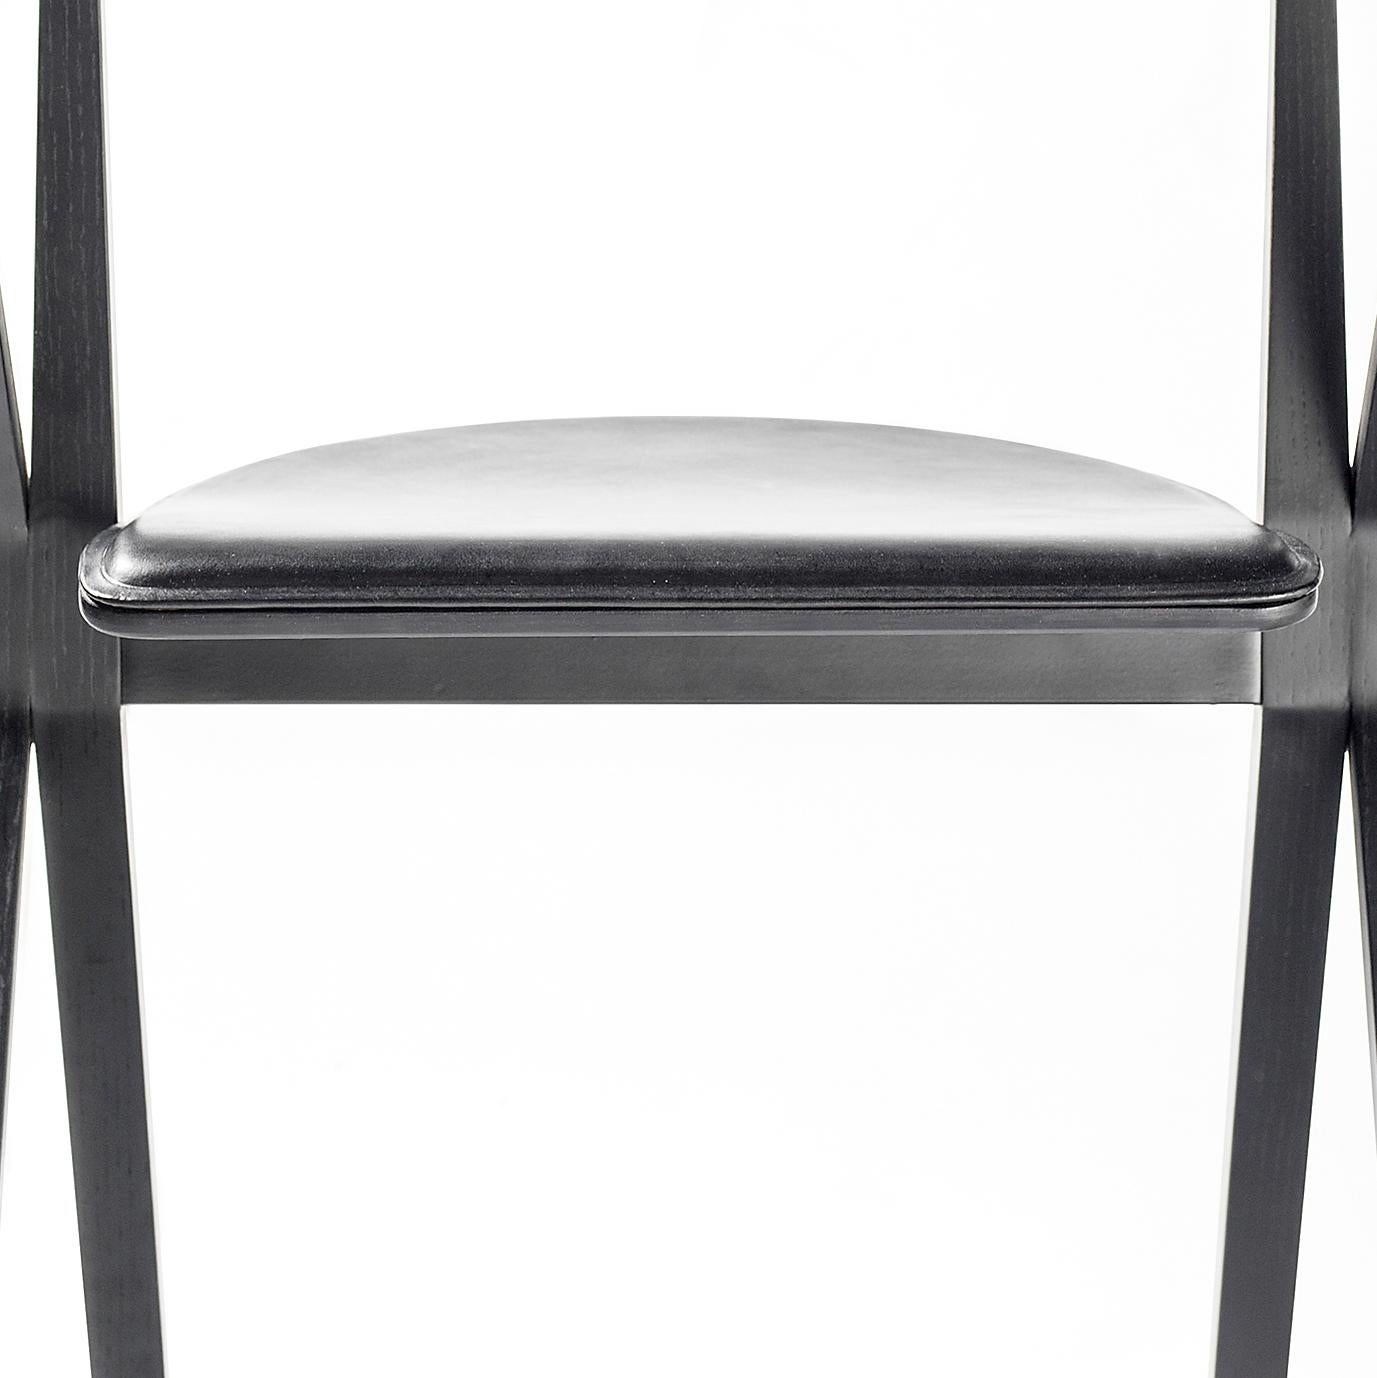 Wood Konstantin Grcic B Chair Black Leather for BD Barcelona